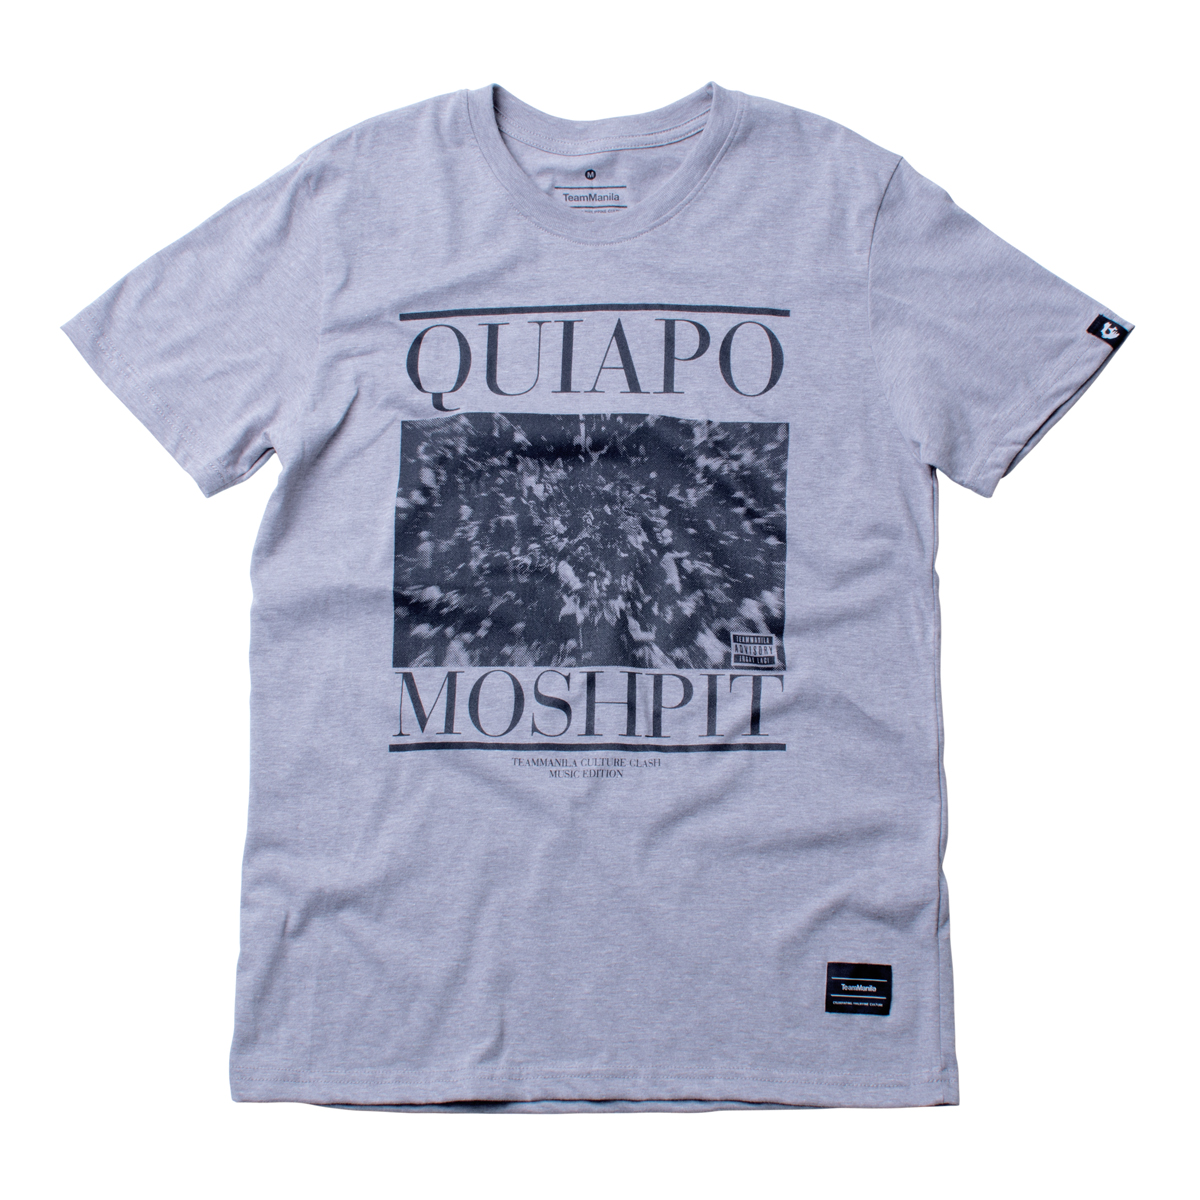 Quiapo Moshpit